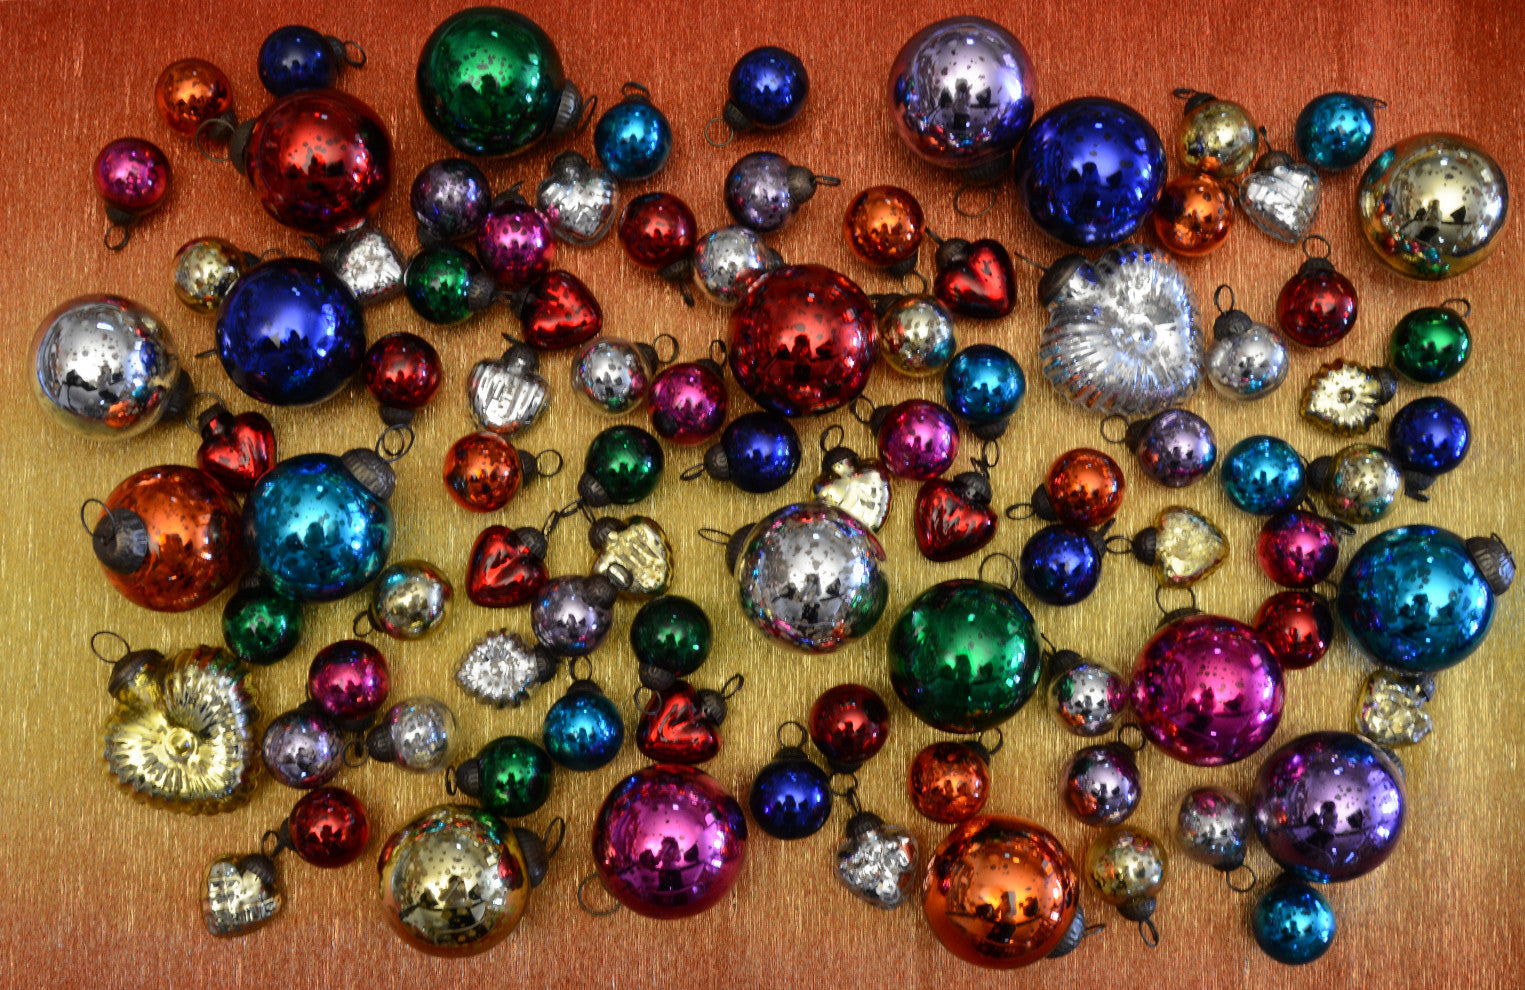 6 Pack | 1.5" Purple Ava Mini Mercury Handcrafted Glass Balls Ornaments Christmas Tree Decoration